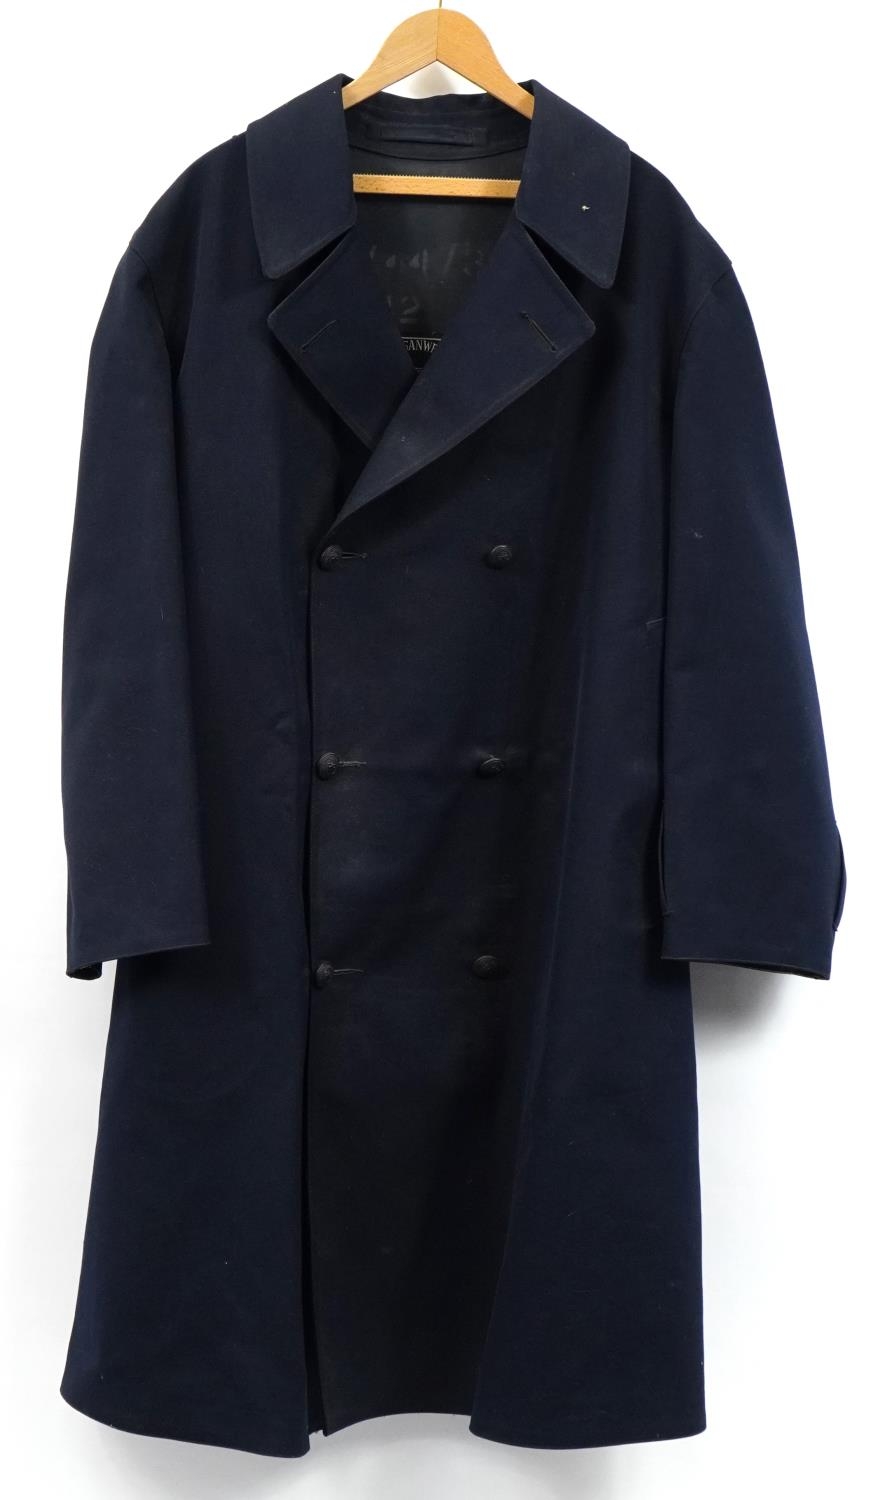 Jack Warner police coat, worn in the TV series Dixon of Dock Green, retailed by Reggan Wear Scotland